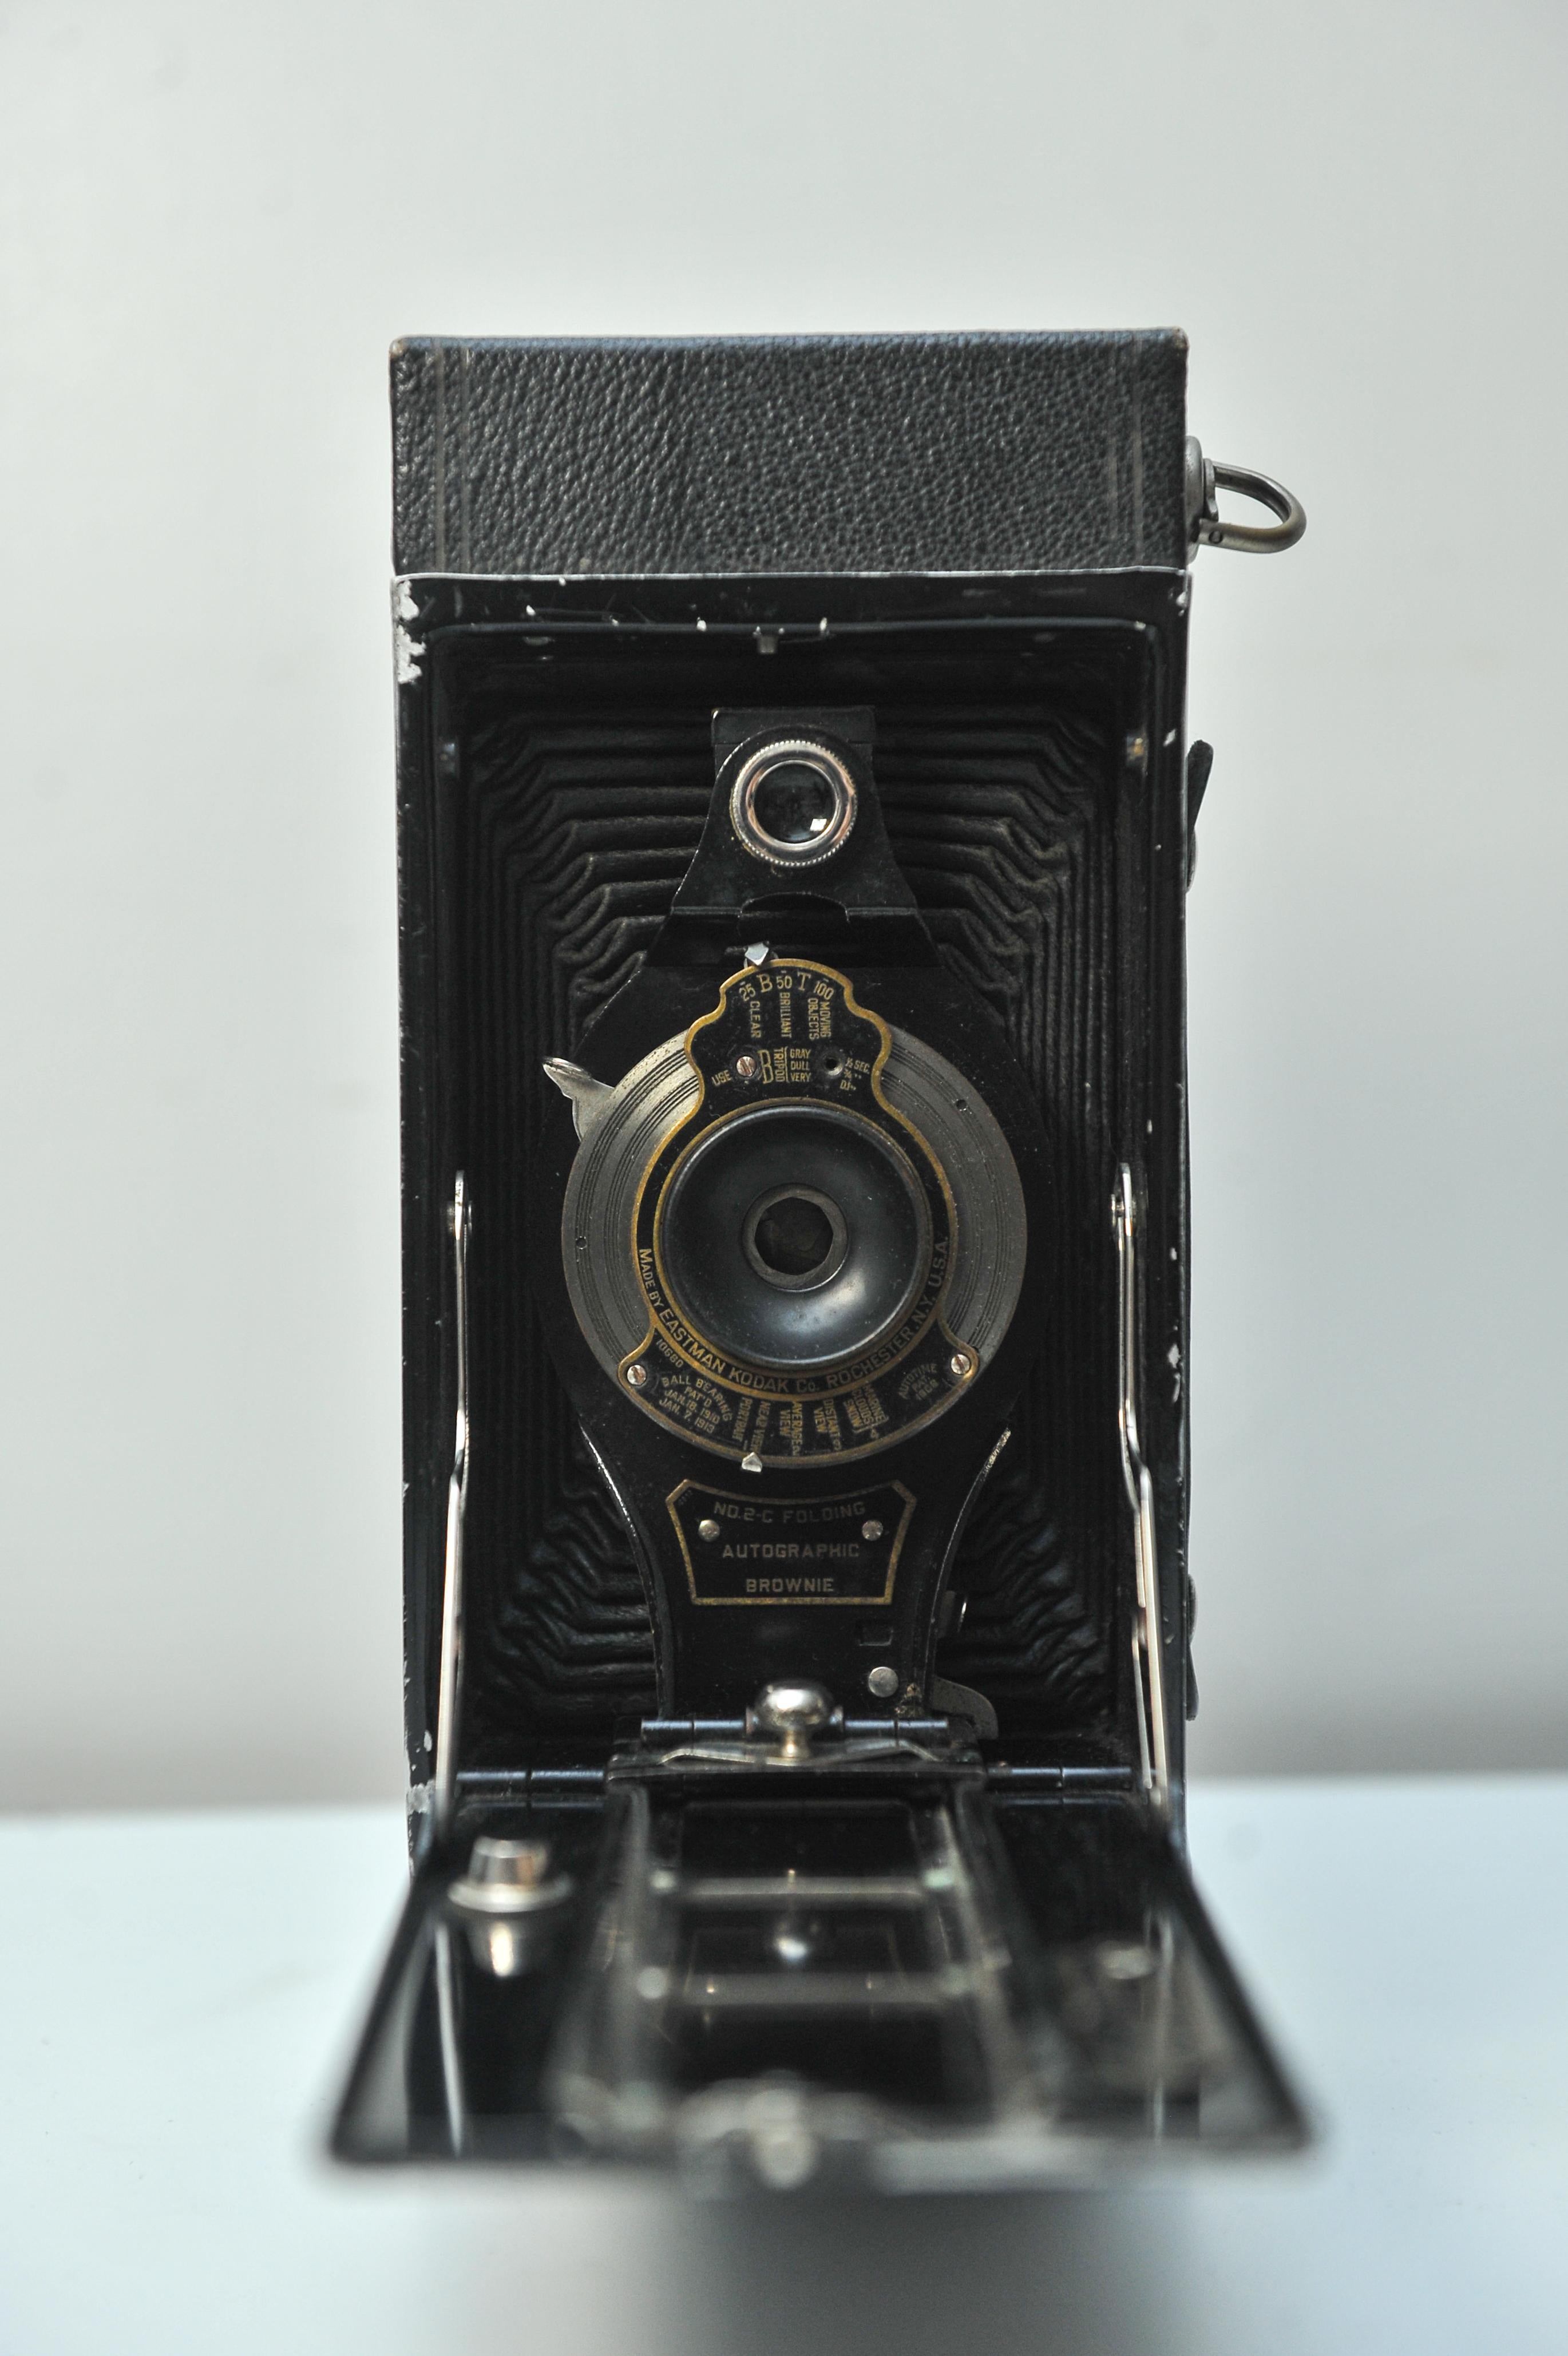 American Eastman Kodak Co No. 2C Folding Autographic Brownie Folding Below Camera For Sale